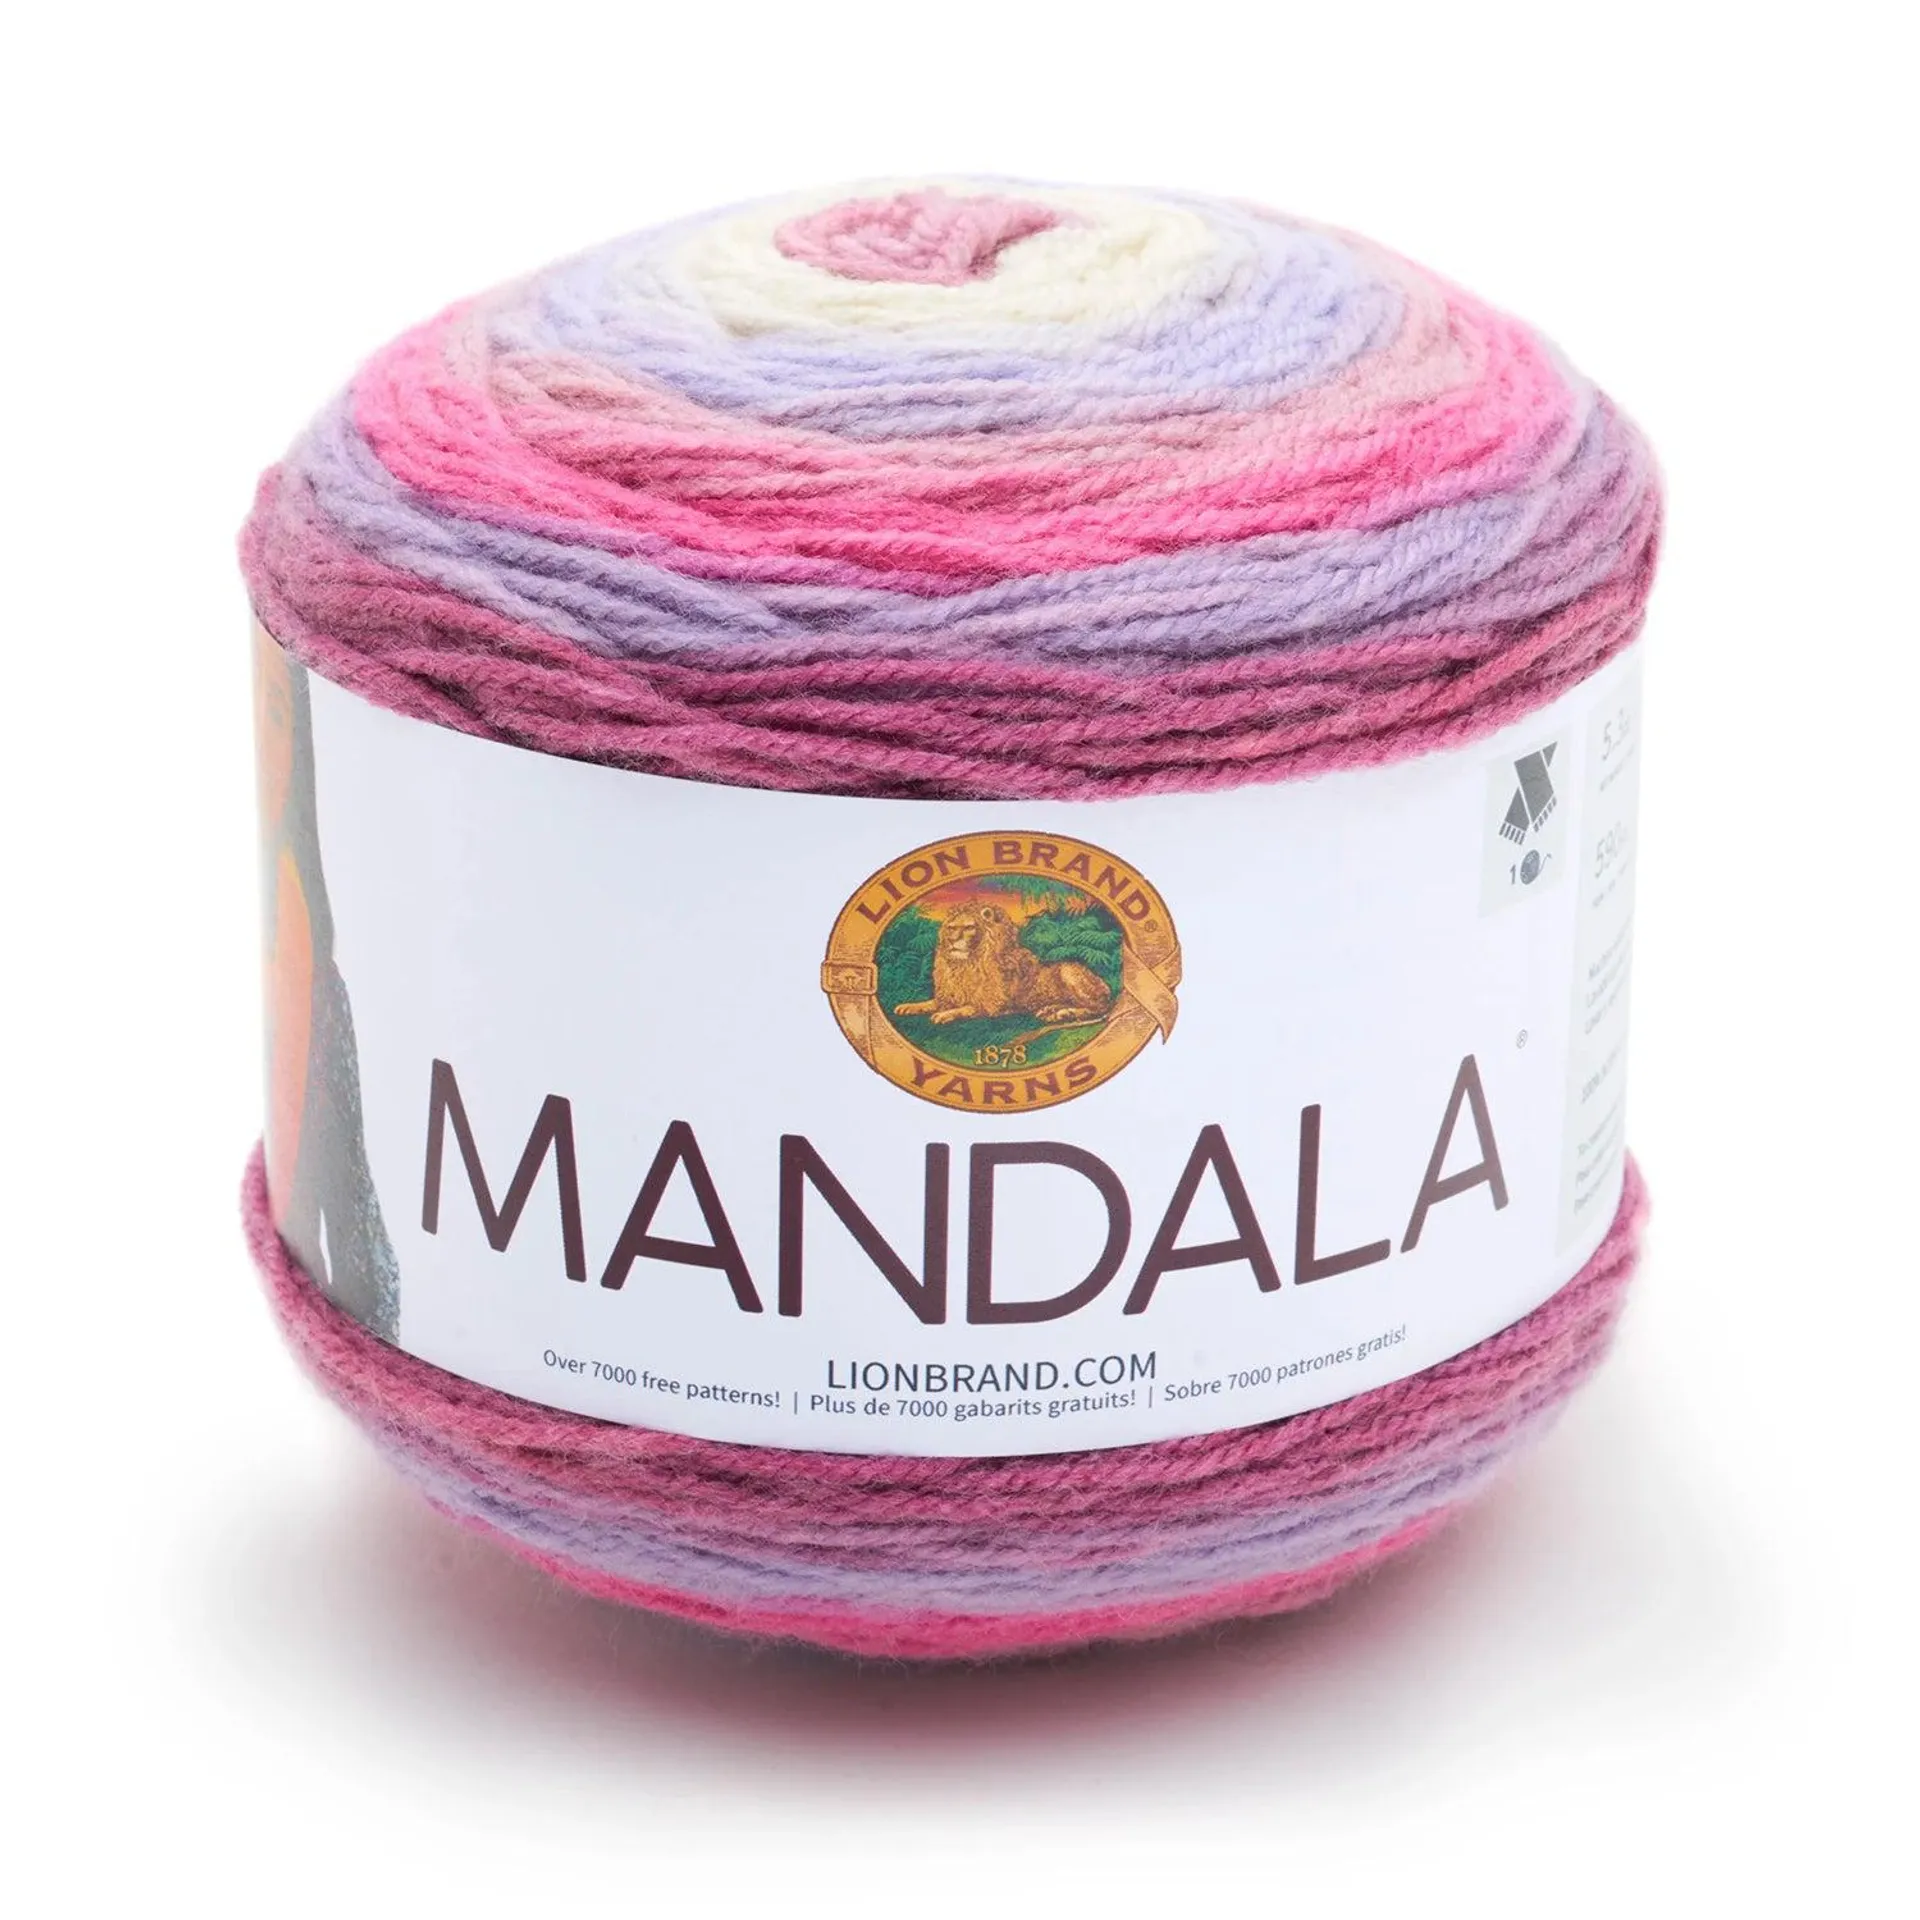 Mandala - 150g - Lion Brand